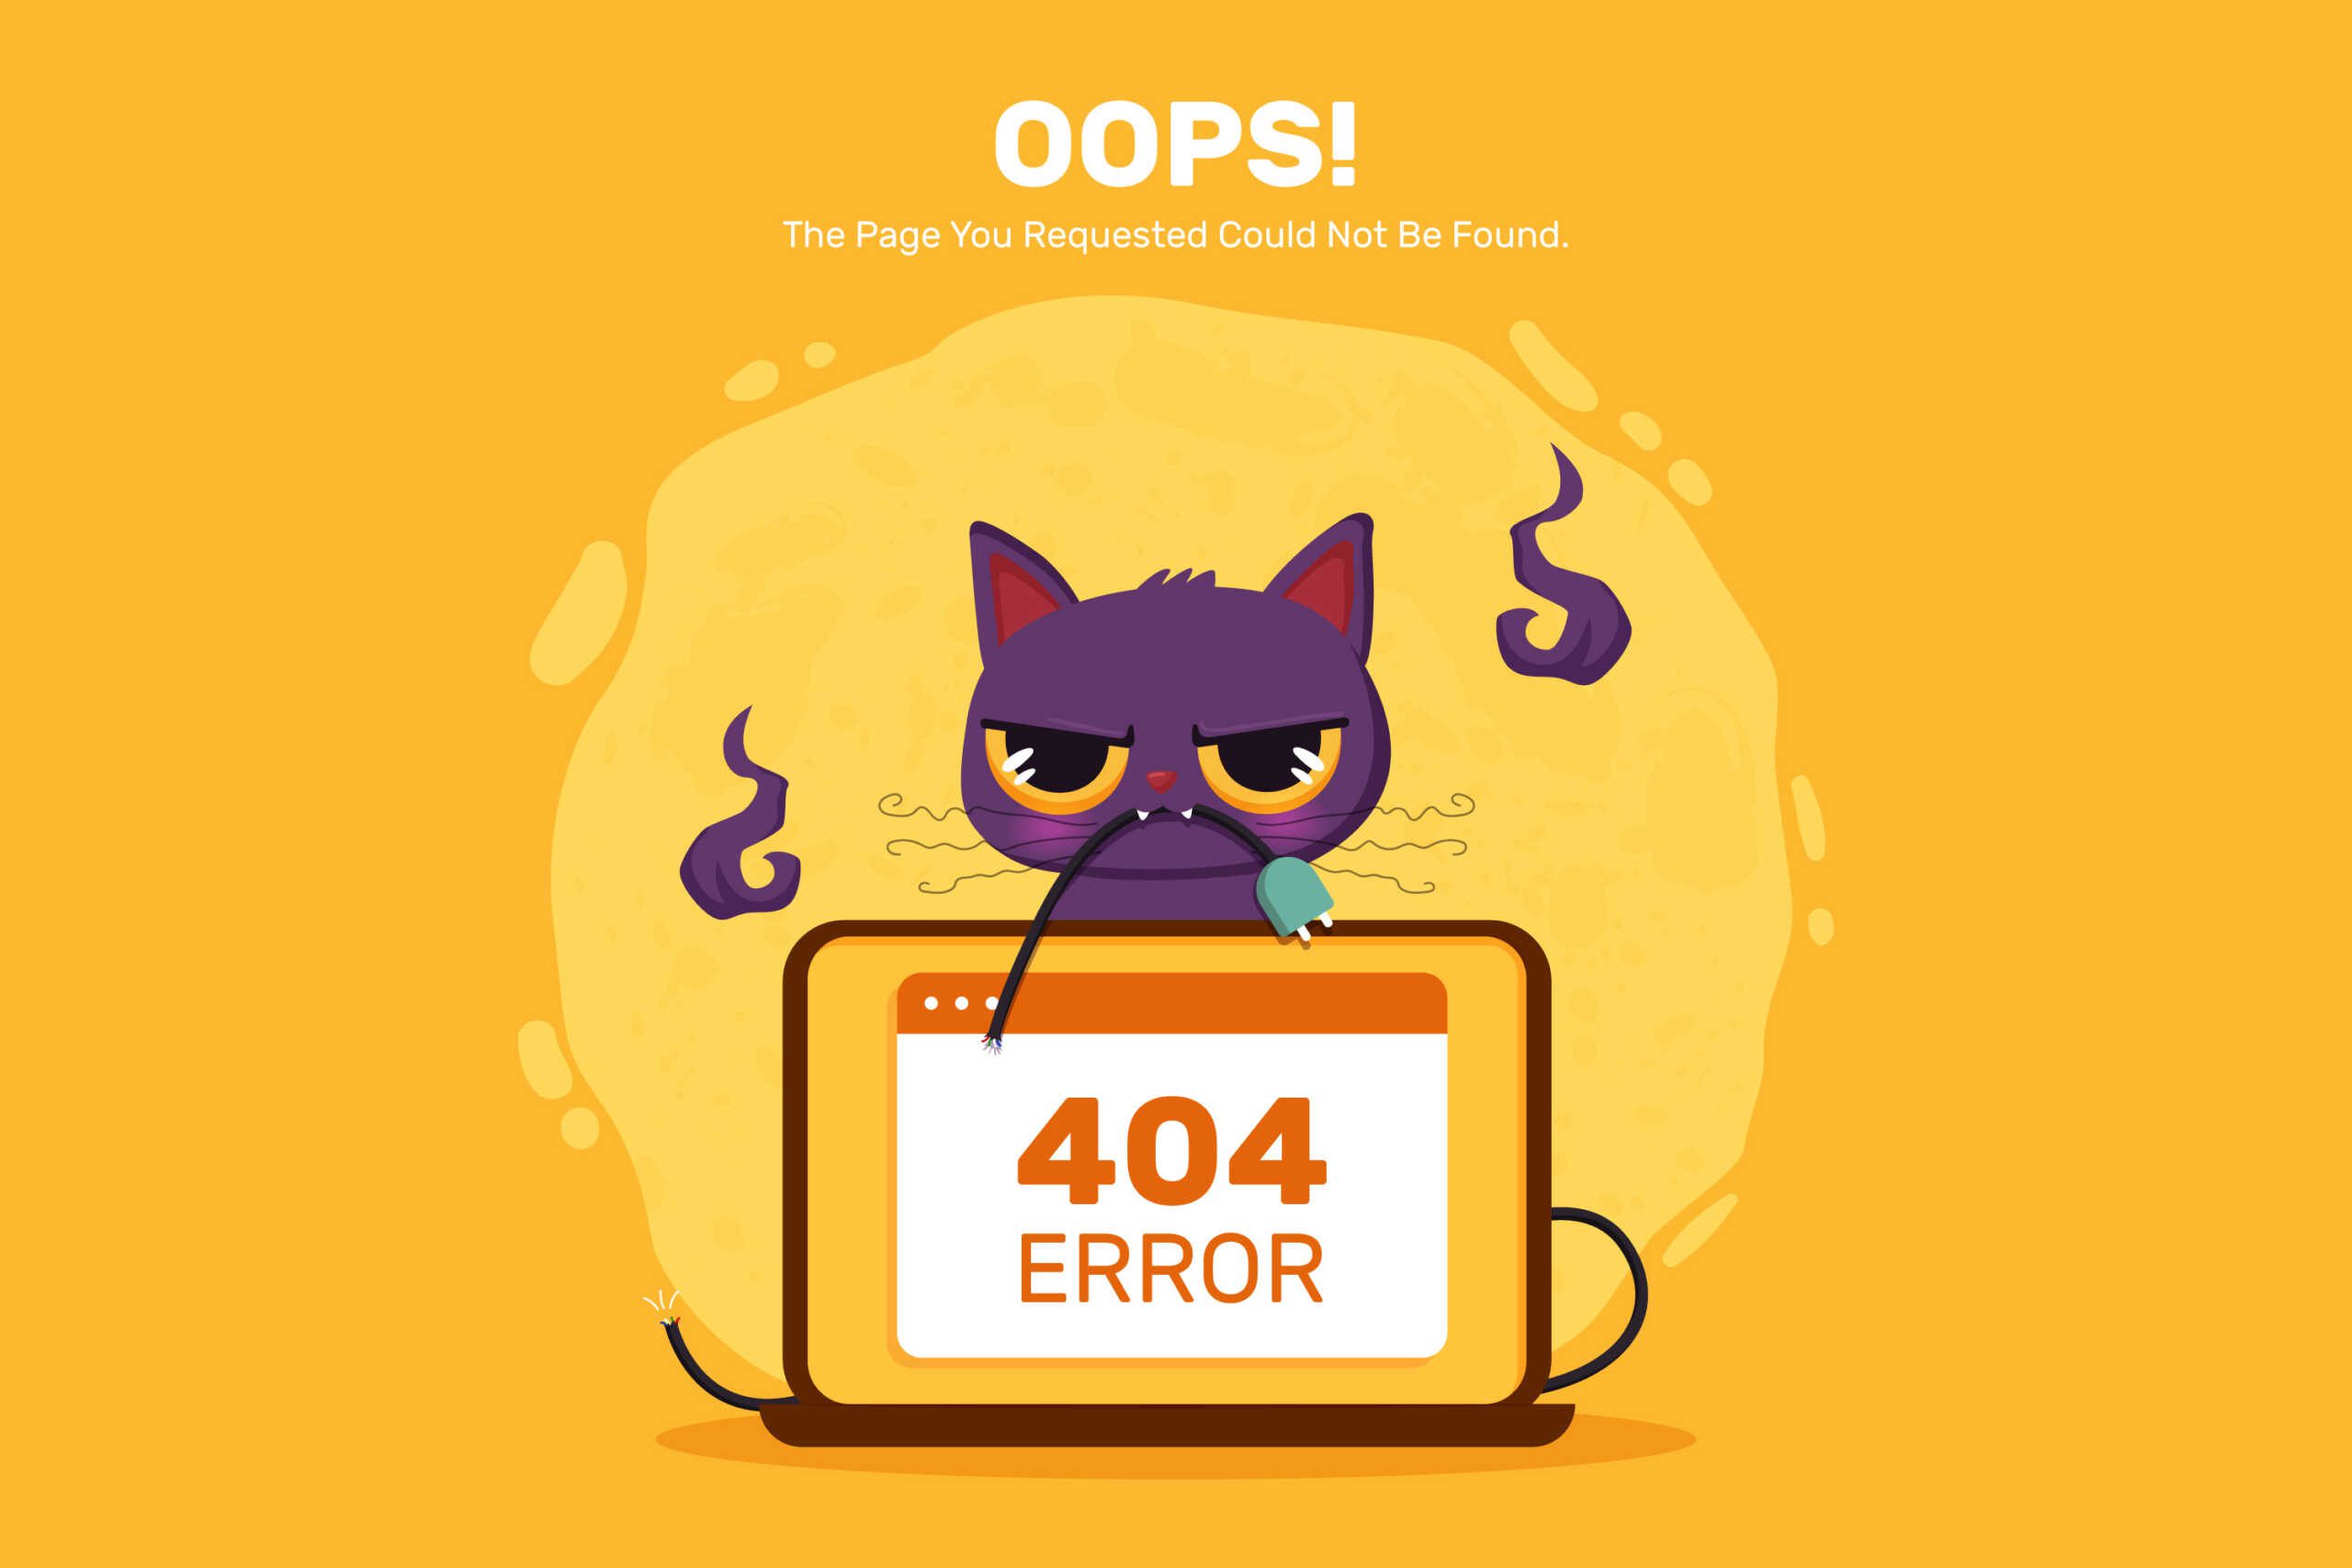 Sửa lỗi 404 "/lost-password/?page_id=7" khi dùng Woocommerce